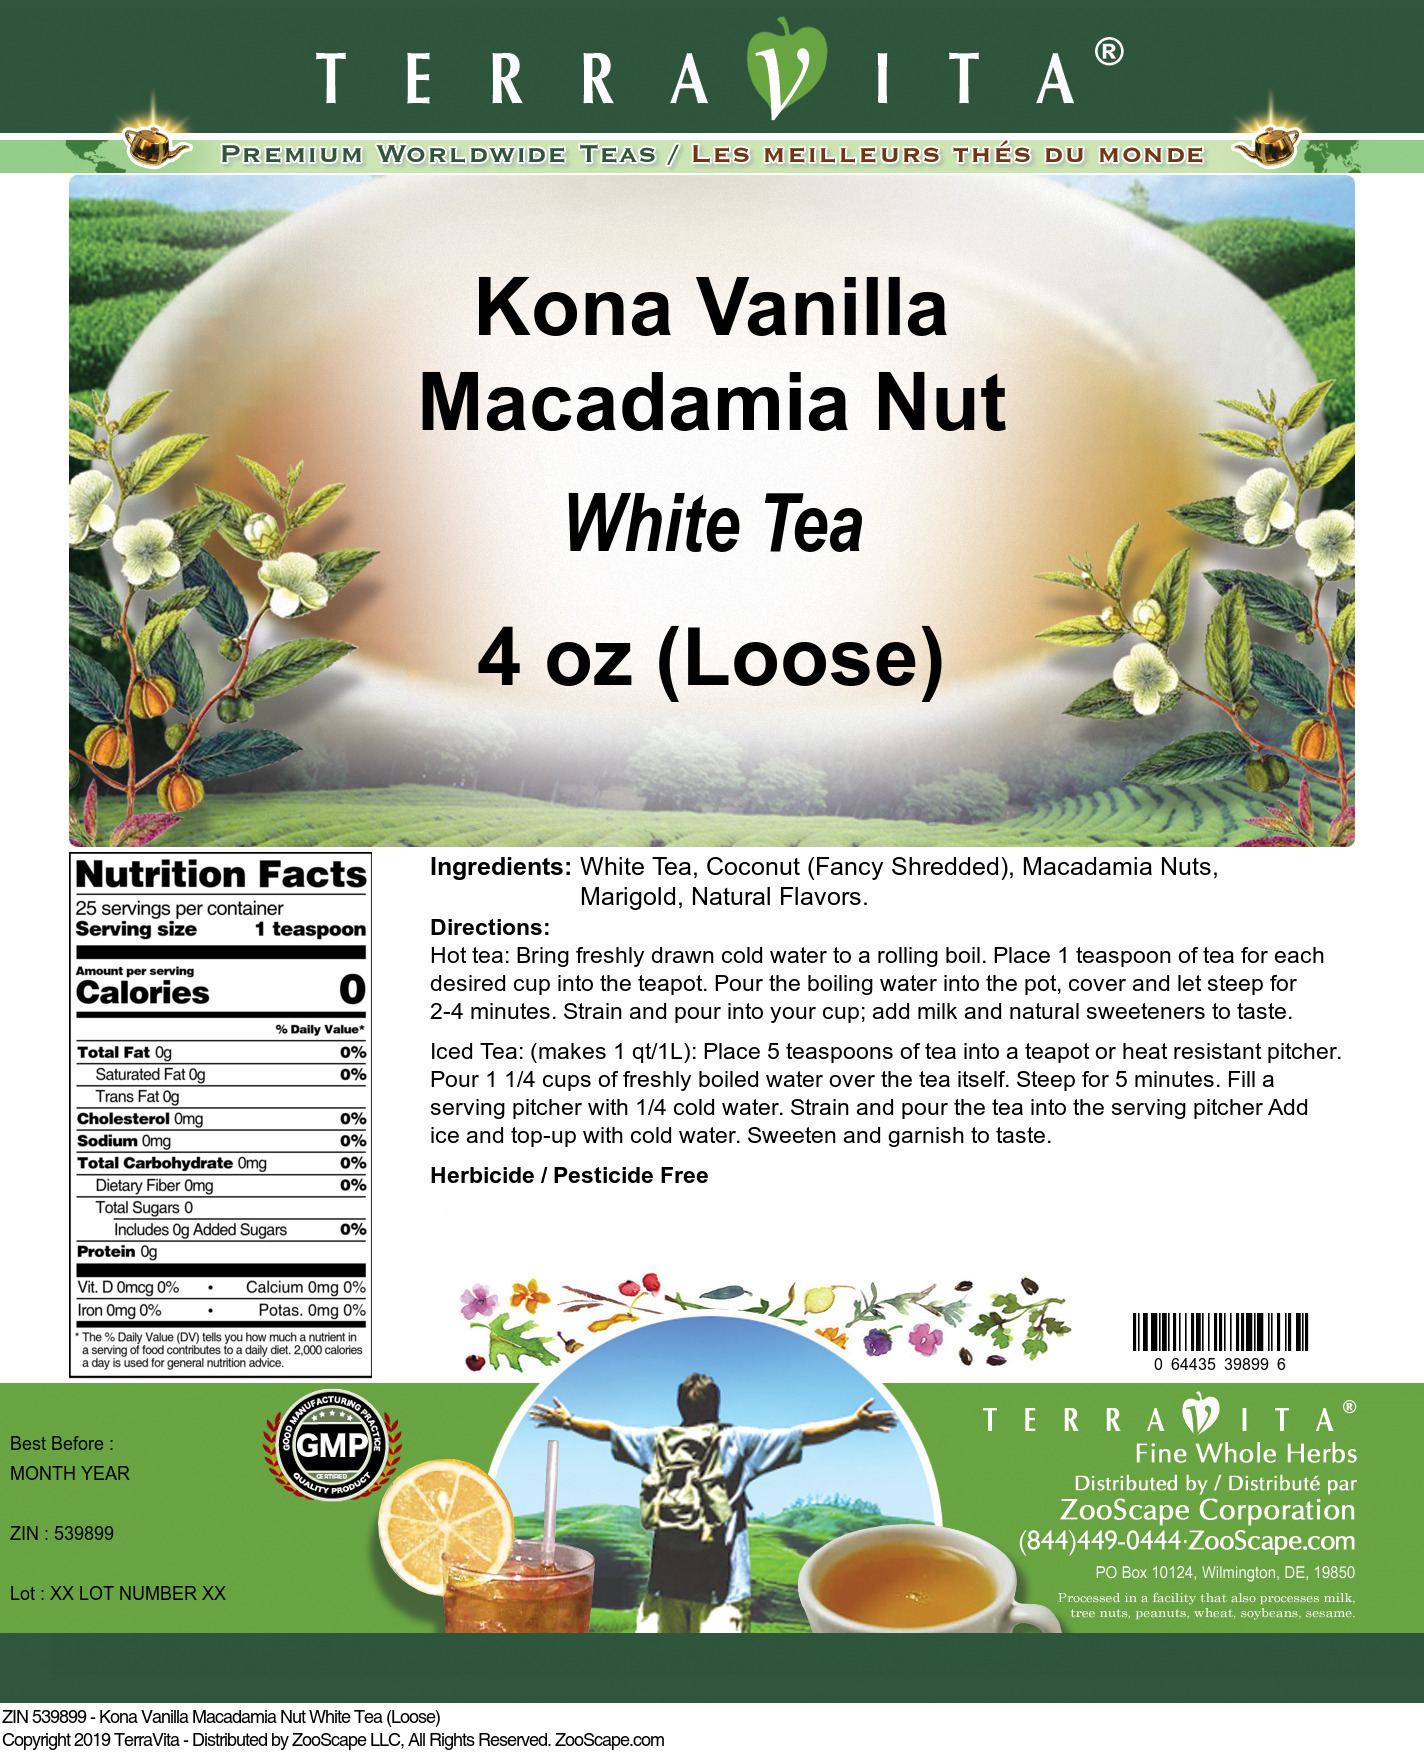 Kona Vanilla Macadamia Nut White Tea (Loose) - Label